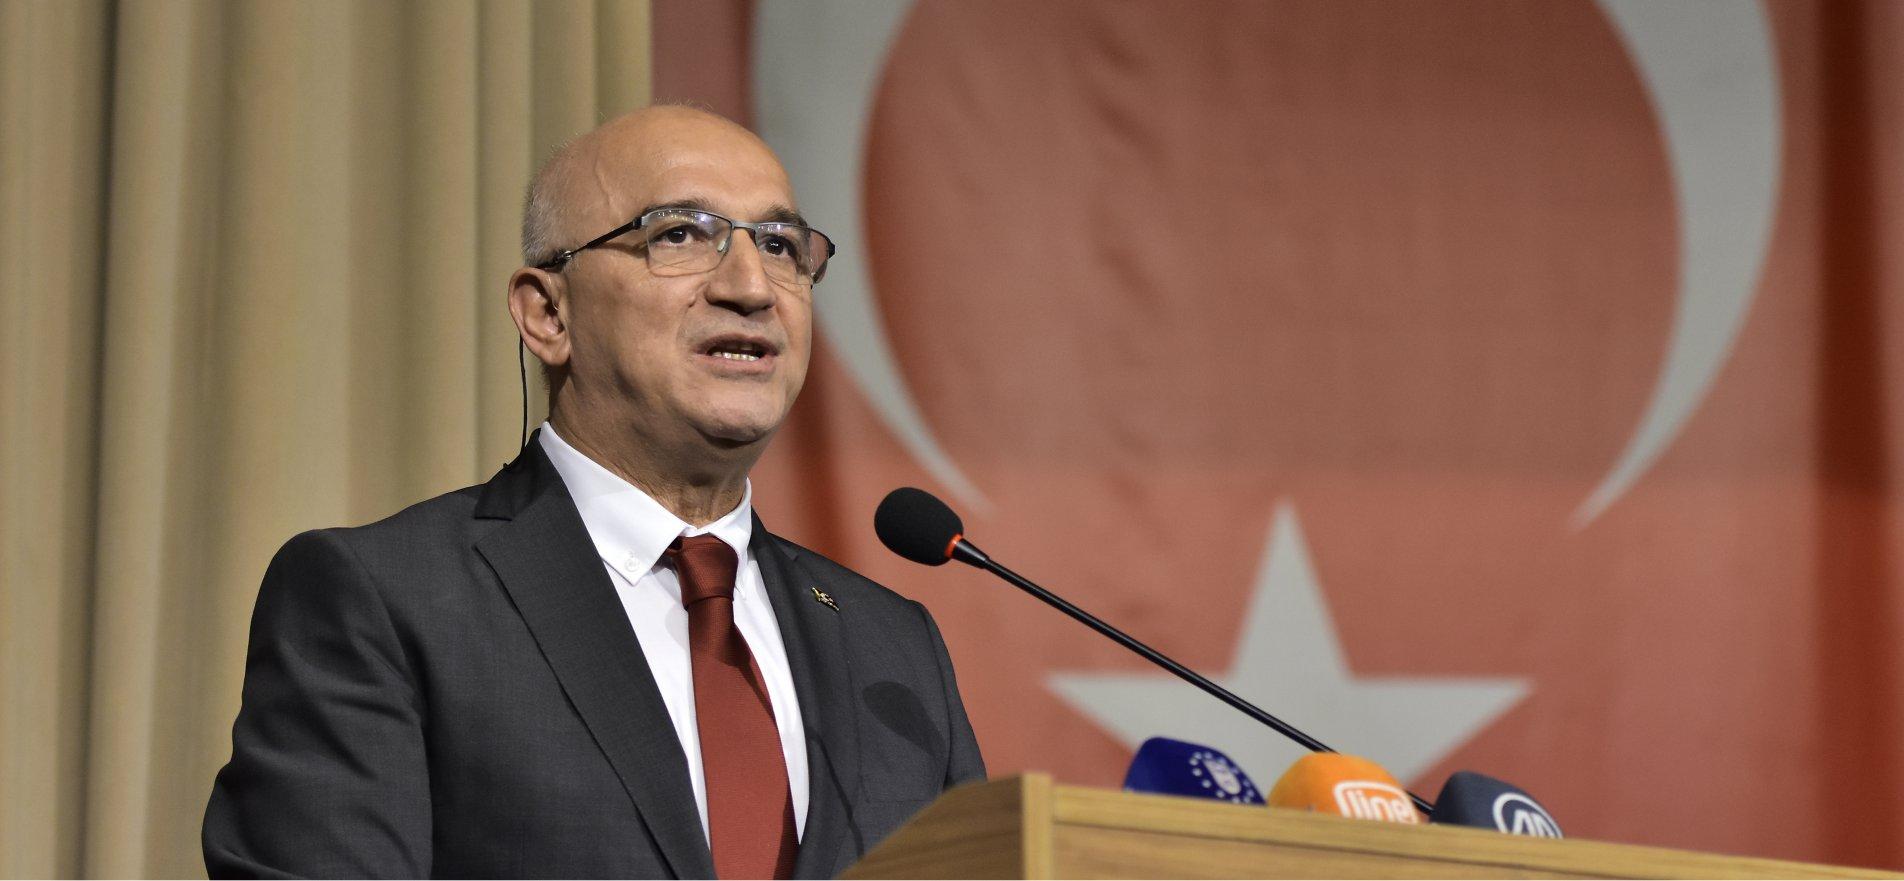 DEPUTY MINISTER ŞENSOY ATTENDED TURKISH EDUCATION IN TÜRKİYE AND IN THE WORLD WORKSHOP